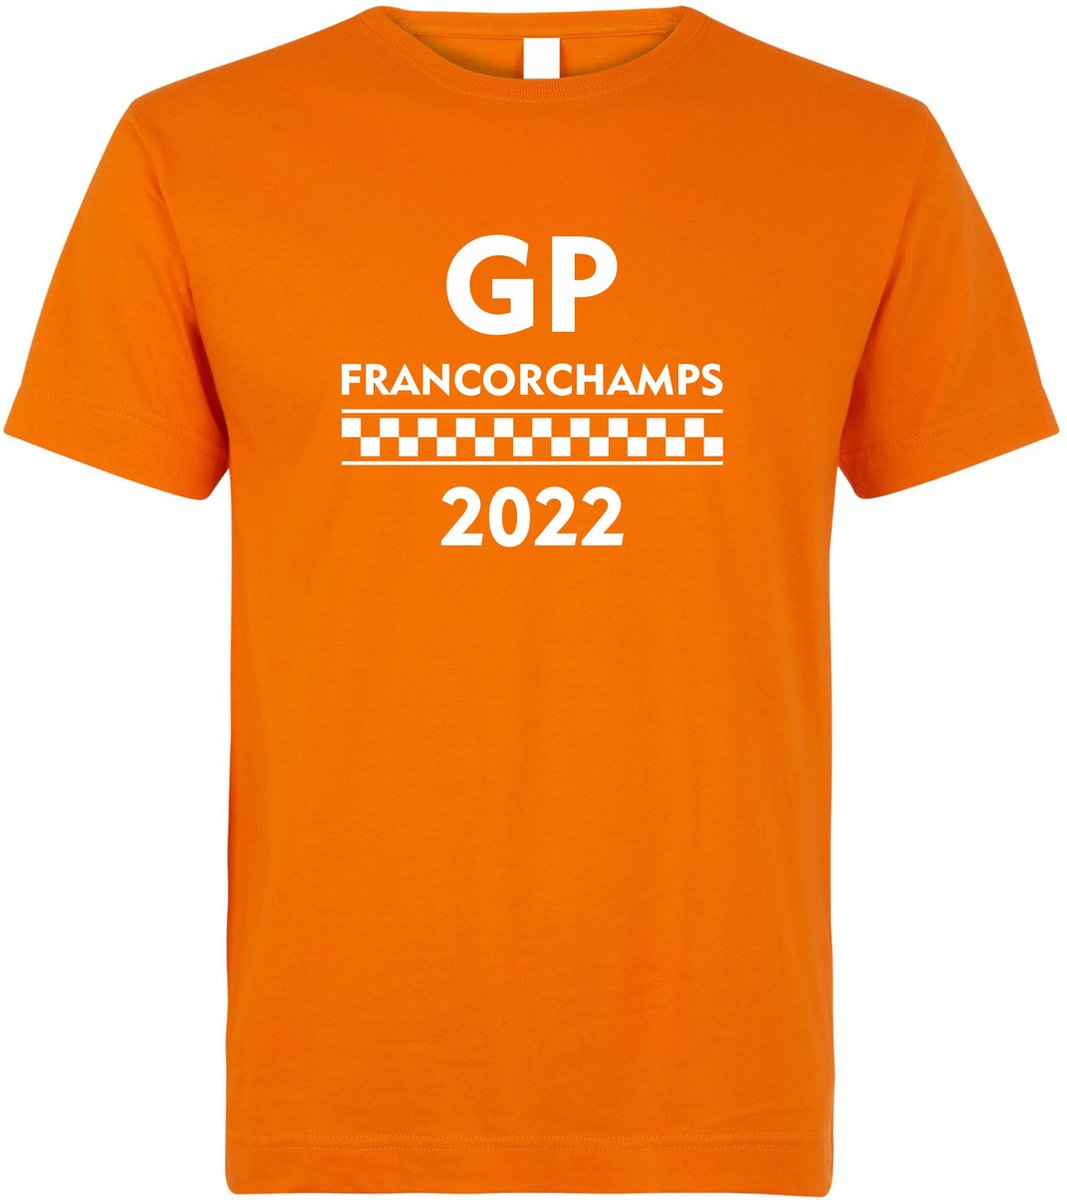 T-shirt kinderen GP Francorchamps 2022 | Max Verstappen / Red Bull Racing / Formule 1 fan | Grand Prix Circuit Spa-Francorchamps | kleding shirt | Oranje | maat 92